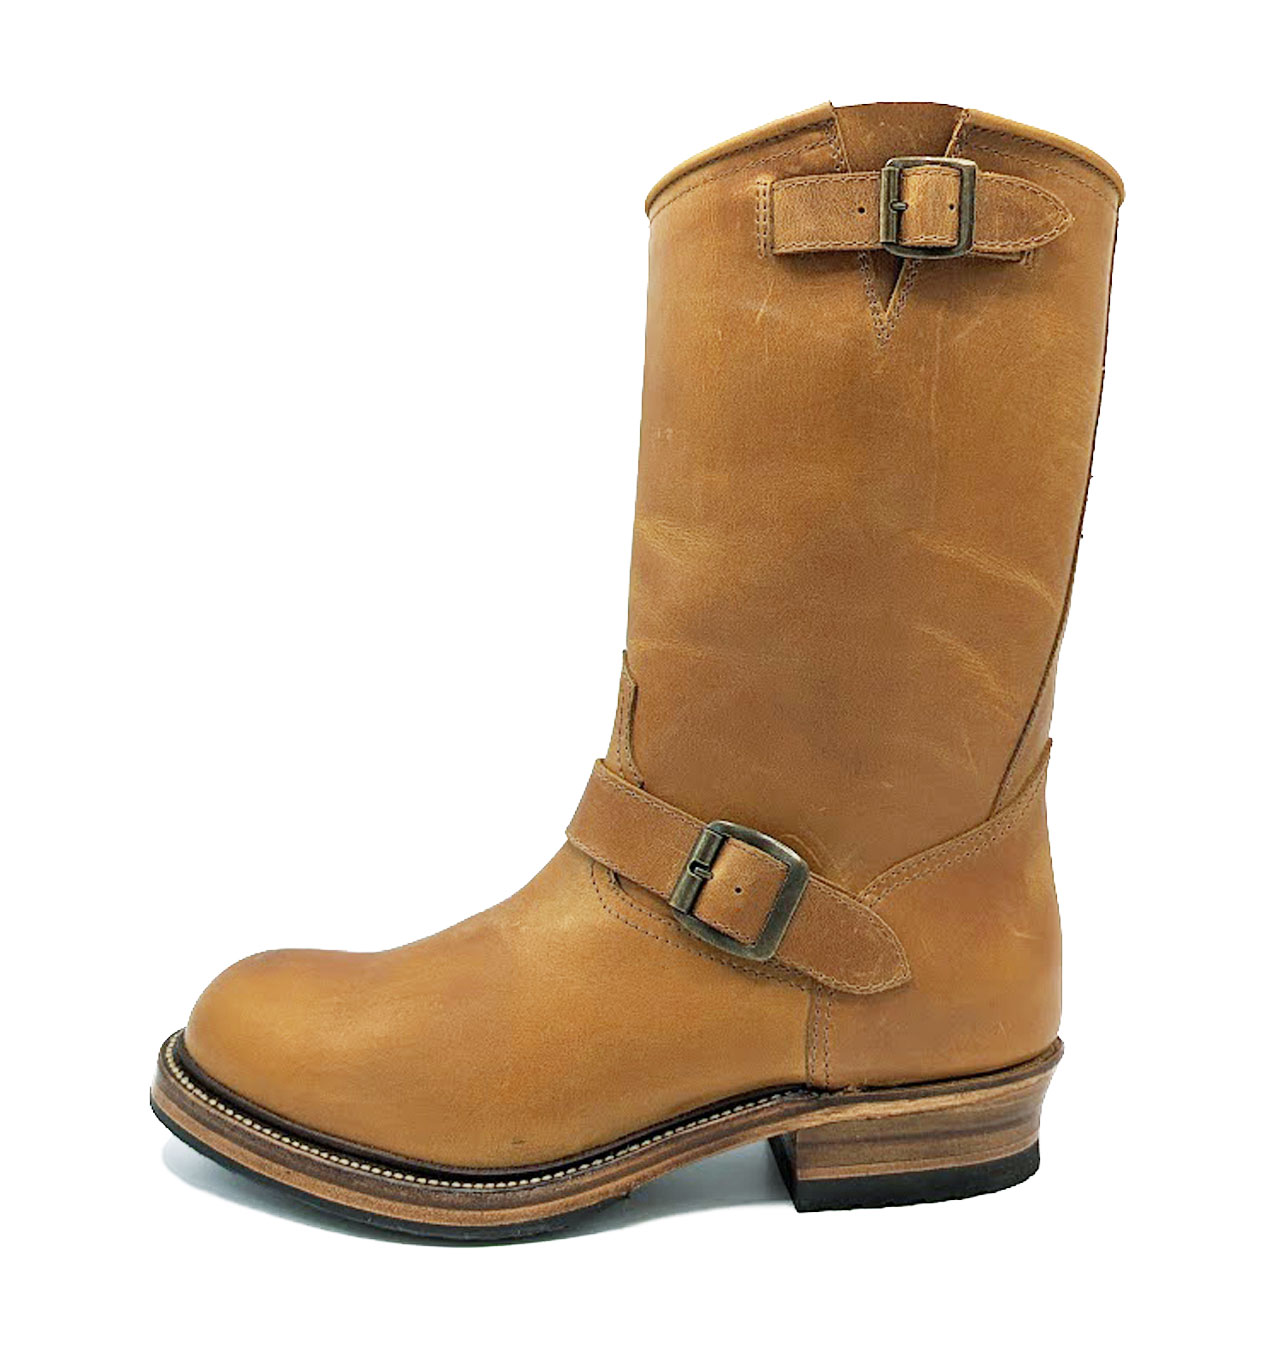 Bright-Shoemakers---Engineer-Boot---Teal12-new-1.jpg